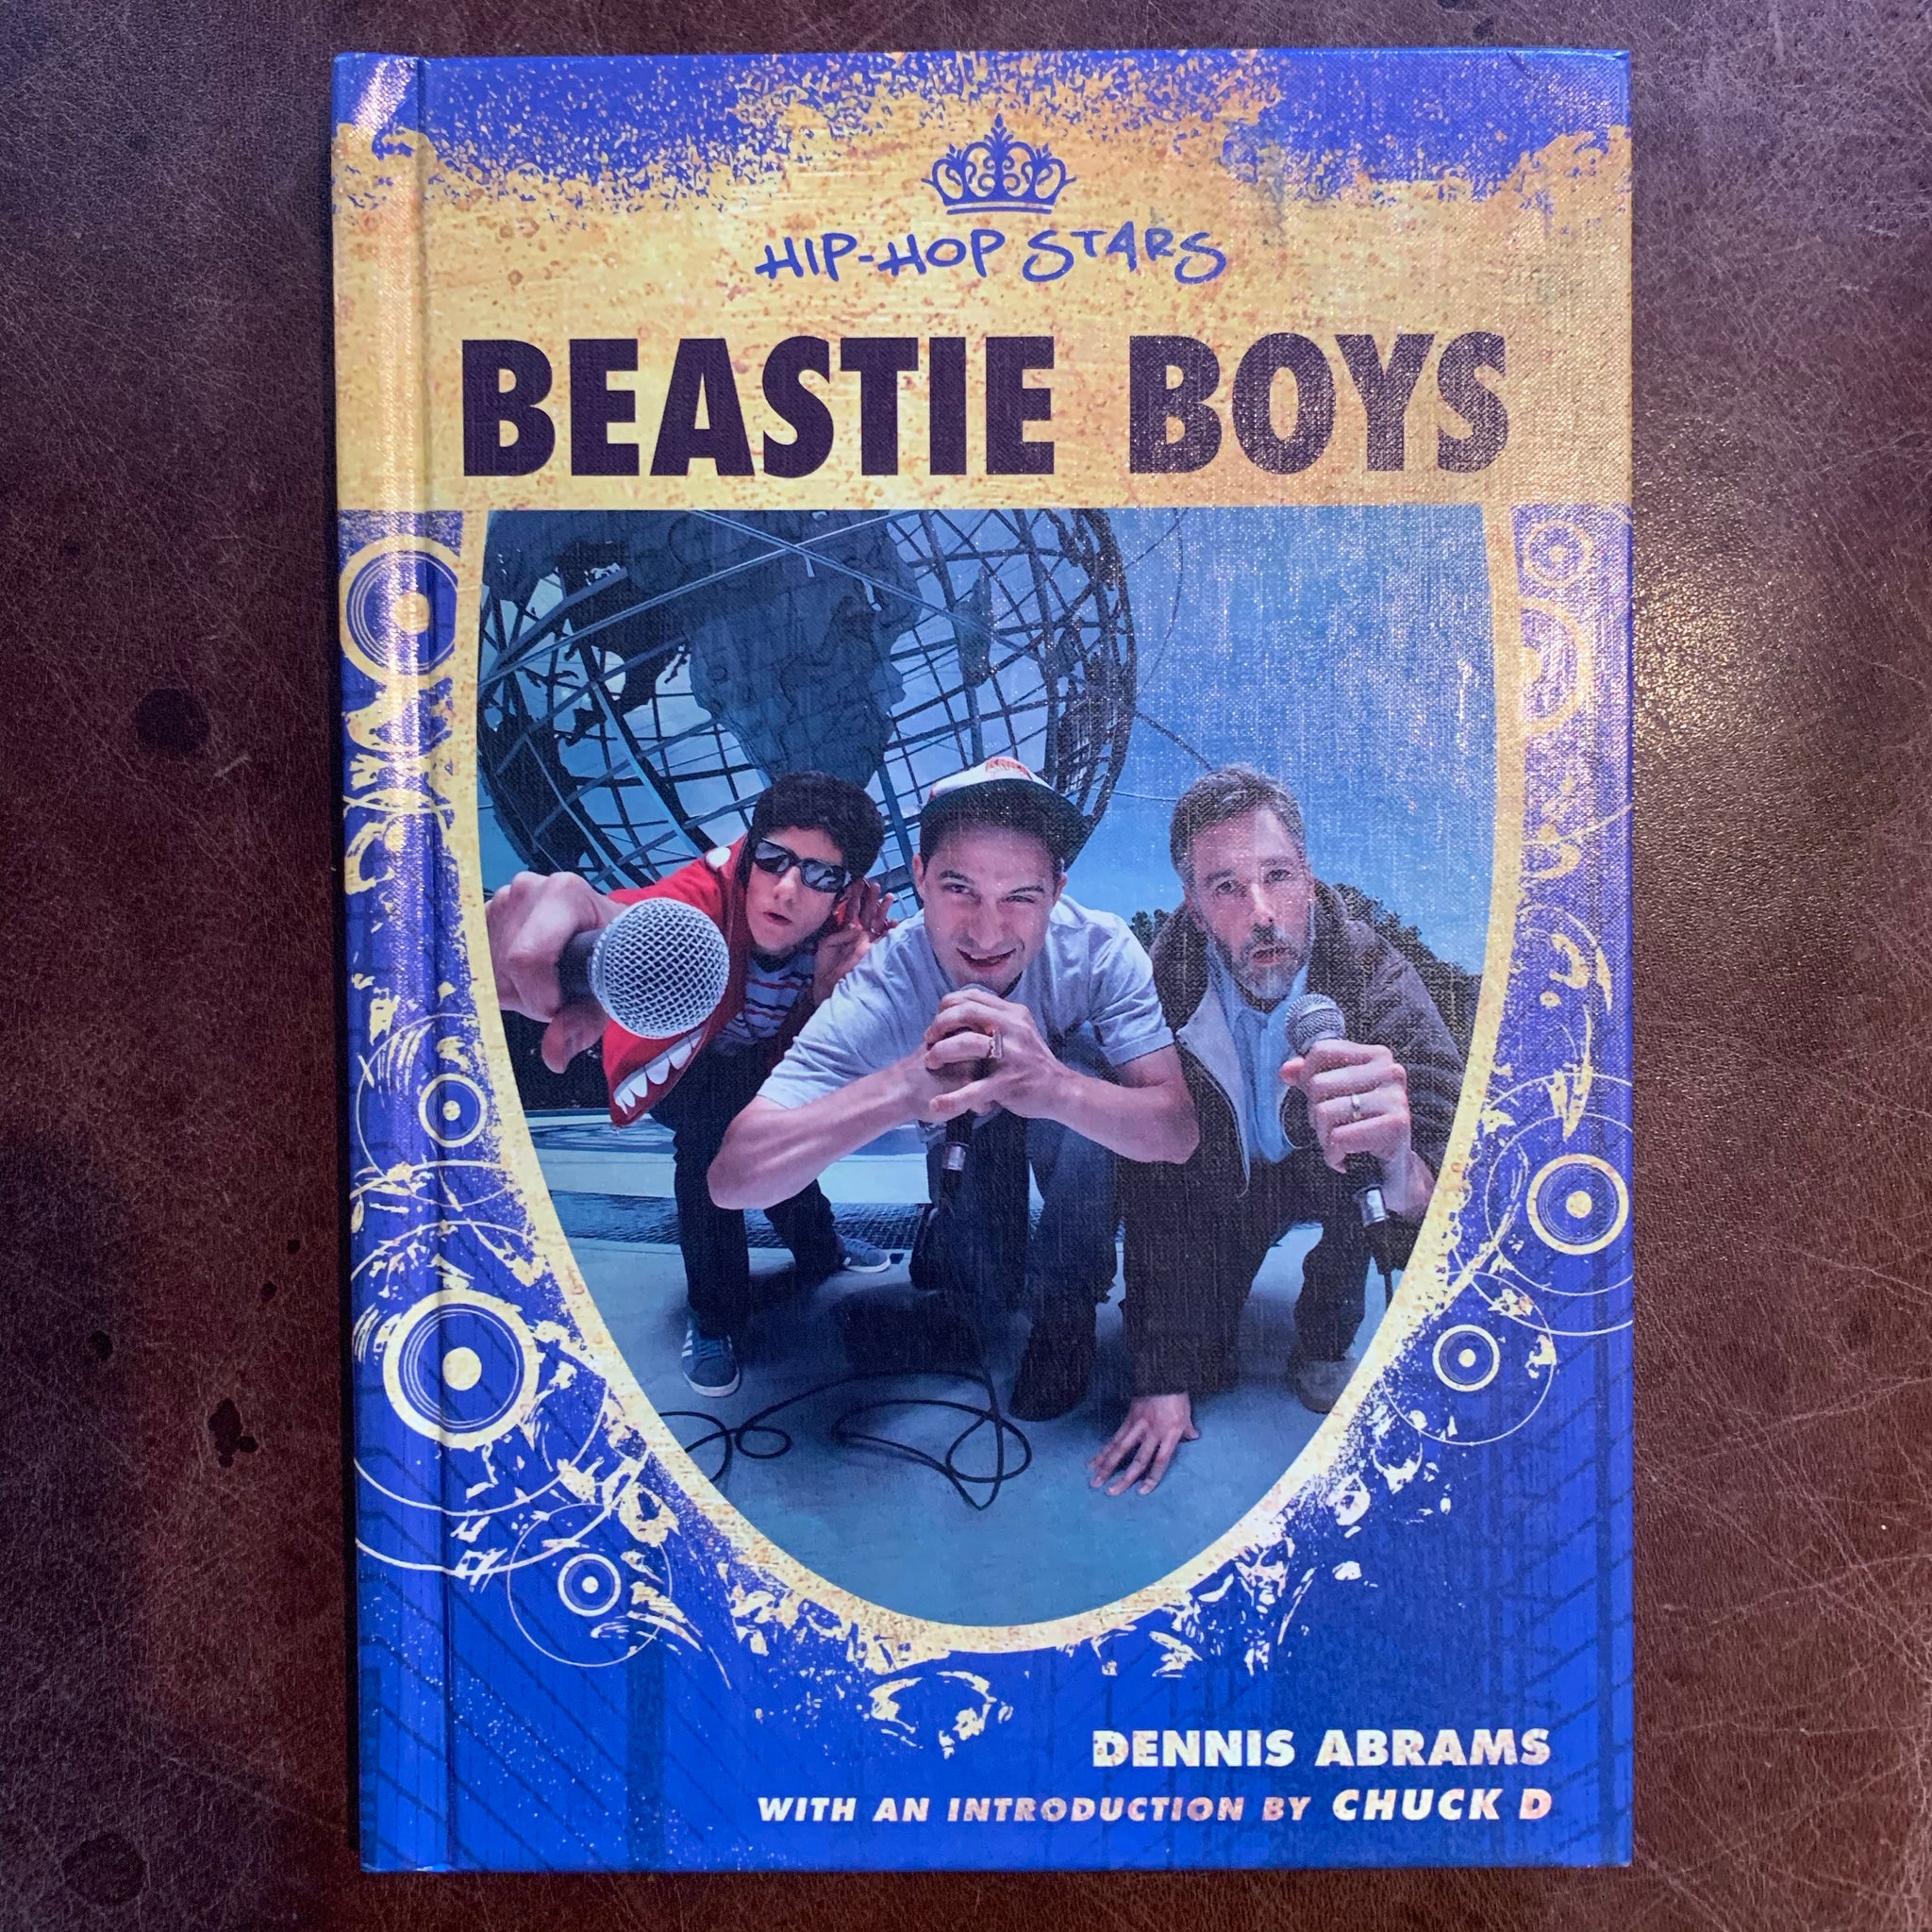 Hip-Hop Stars Beastie Boys by Dennis Abrams